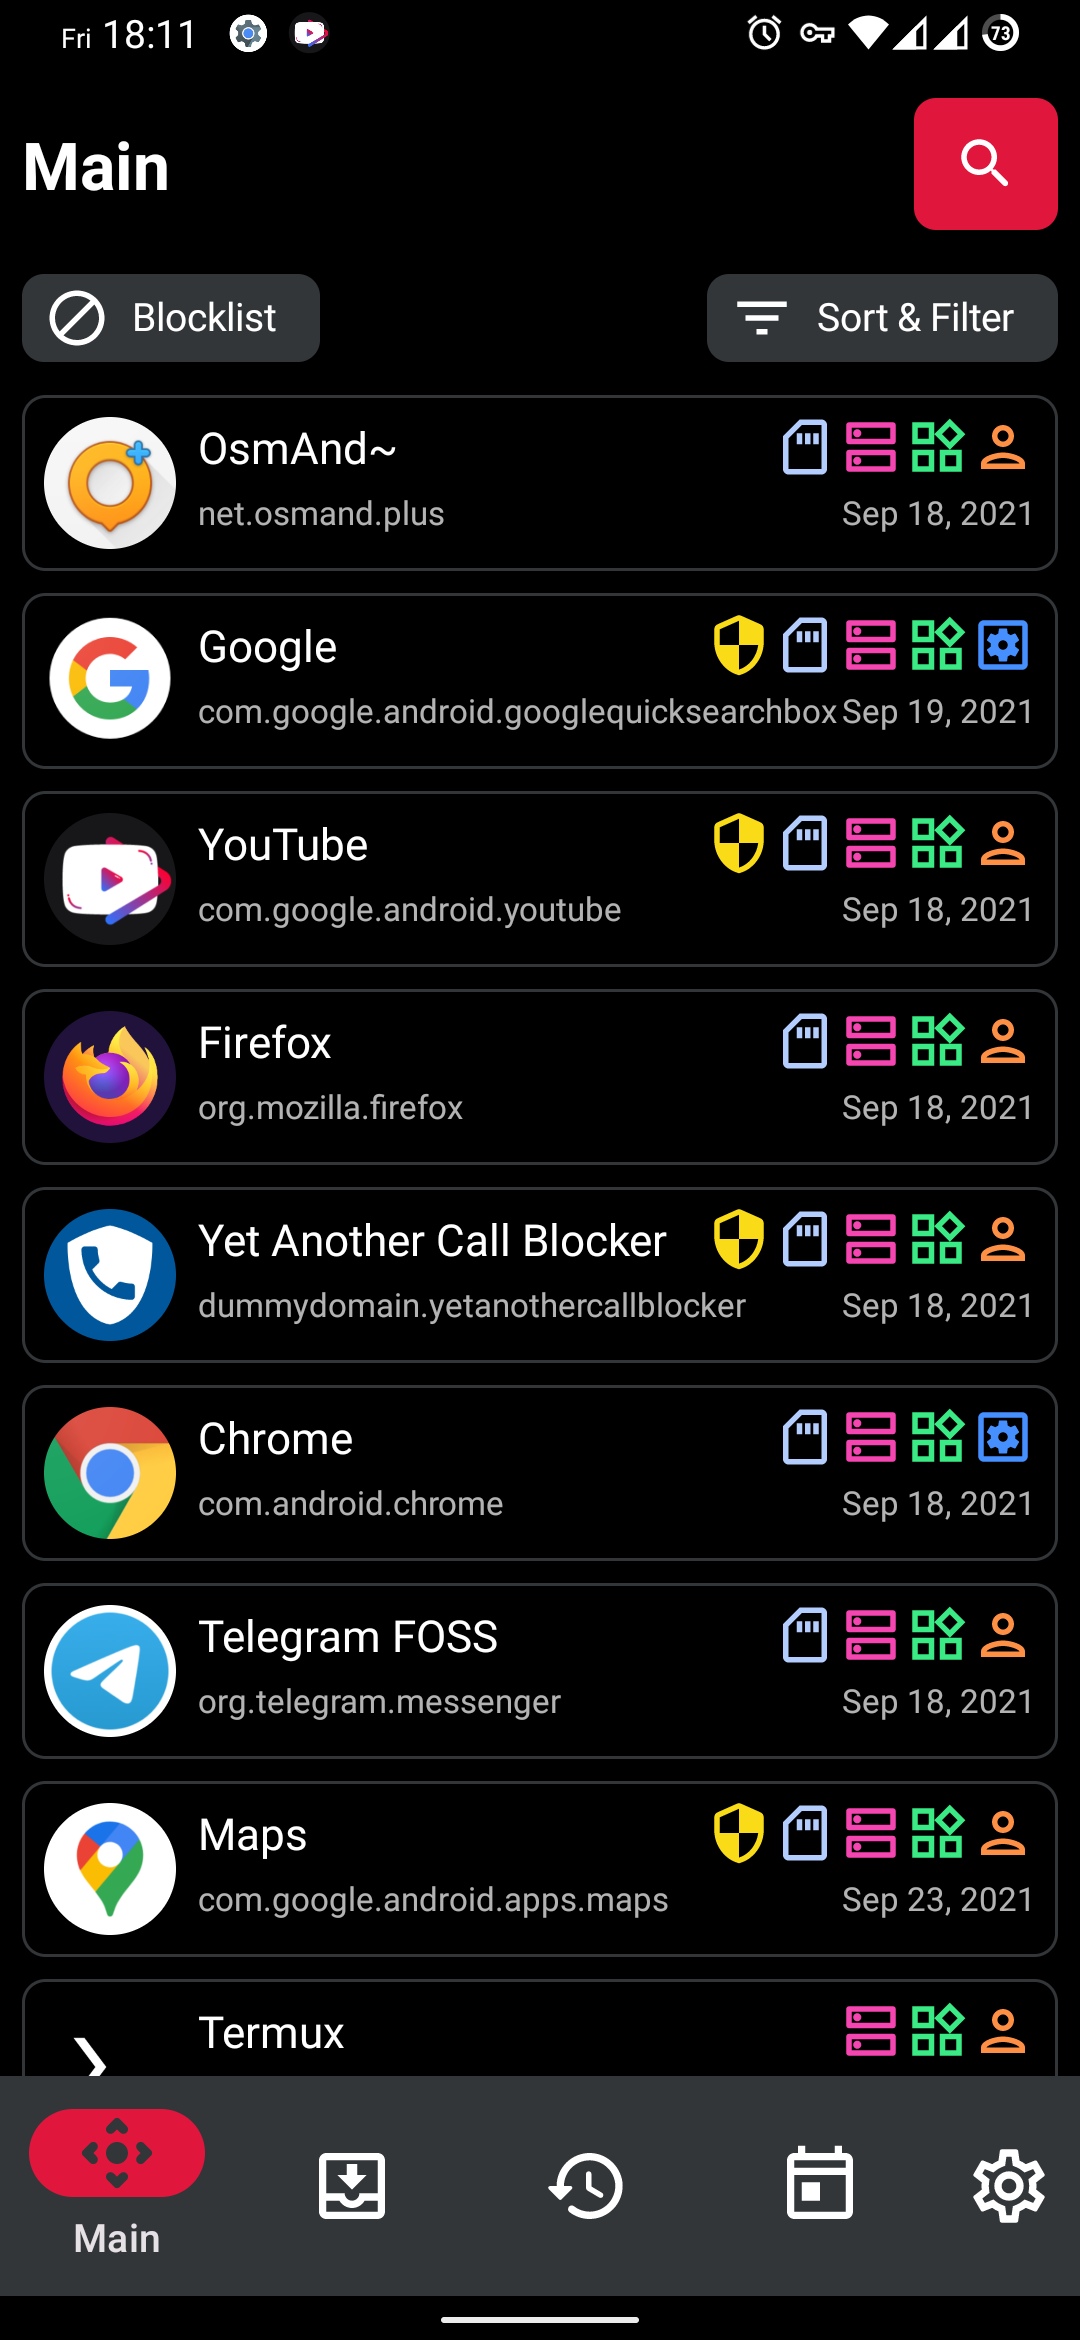 oandbackupx-syncthing-backup-android-phone-oabx-apps